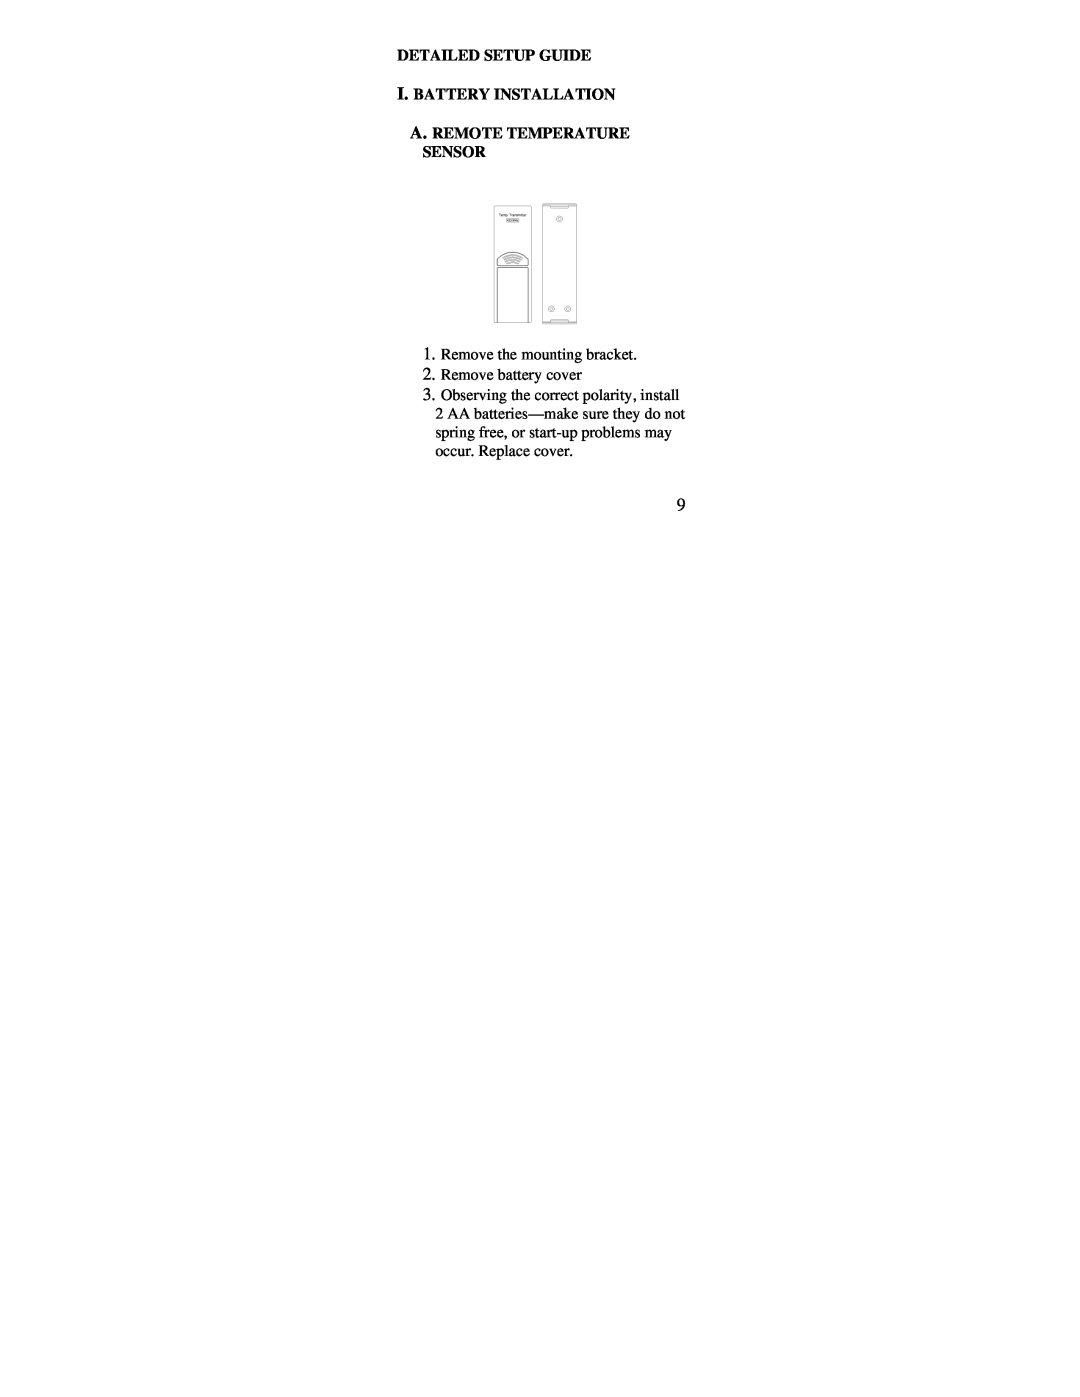 La Crosse Technology WS-9117U instruction manual Detailed Setup Guide I. Battery Installation, A. Remote Temperature Sensor 